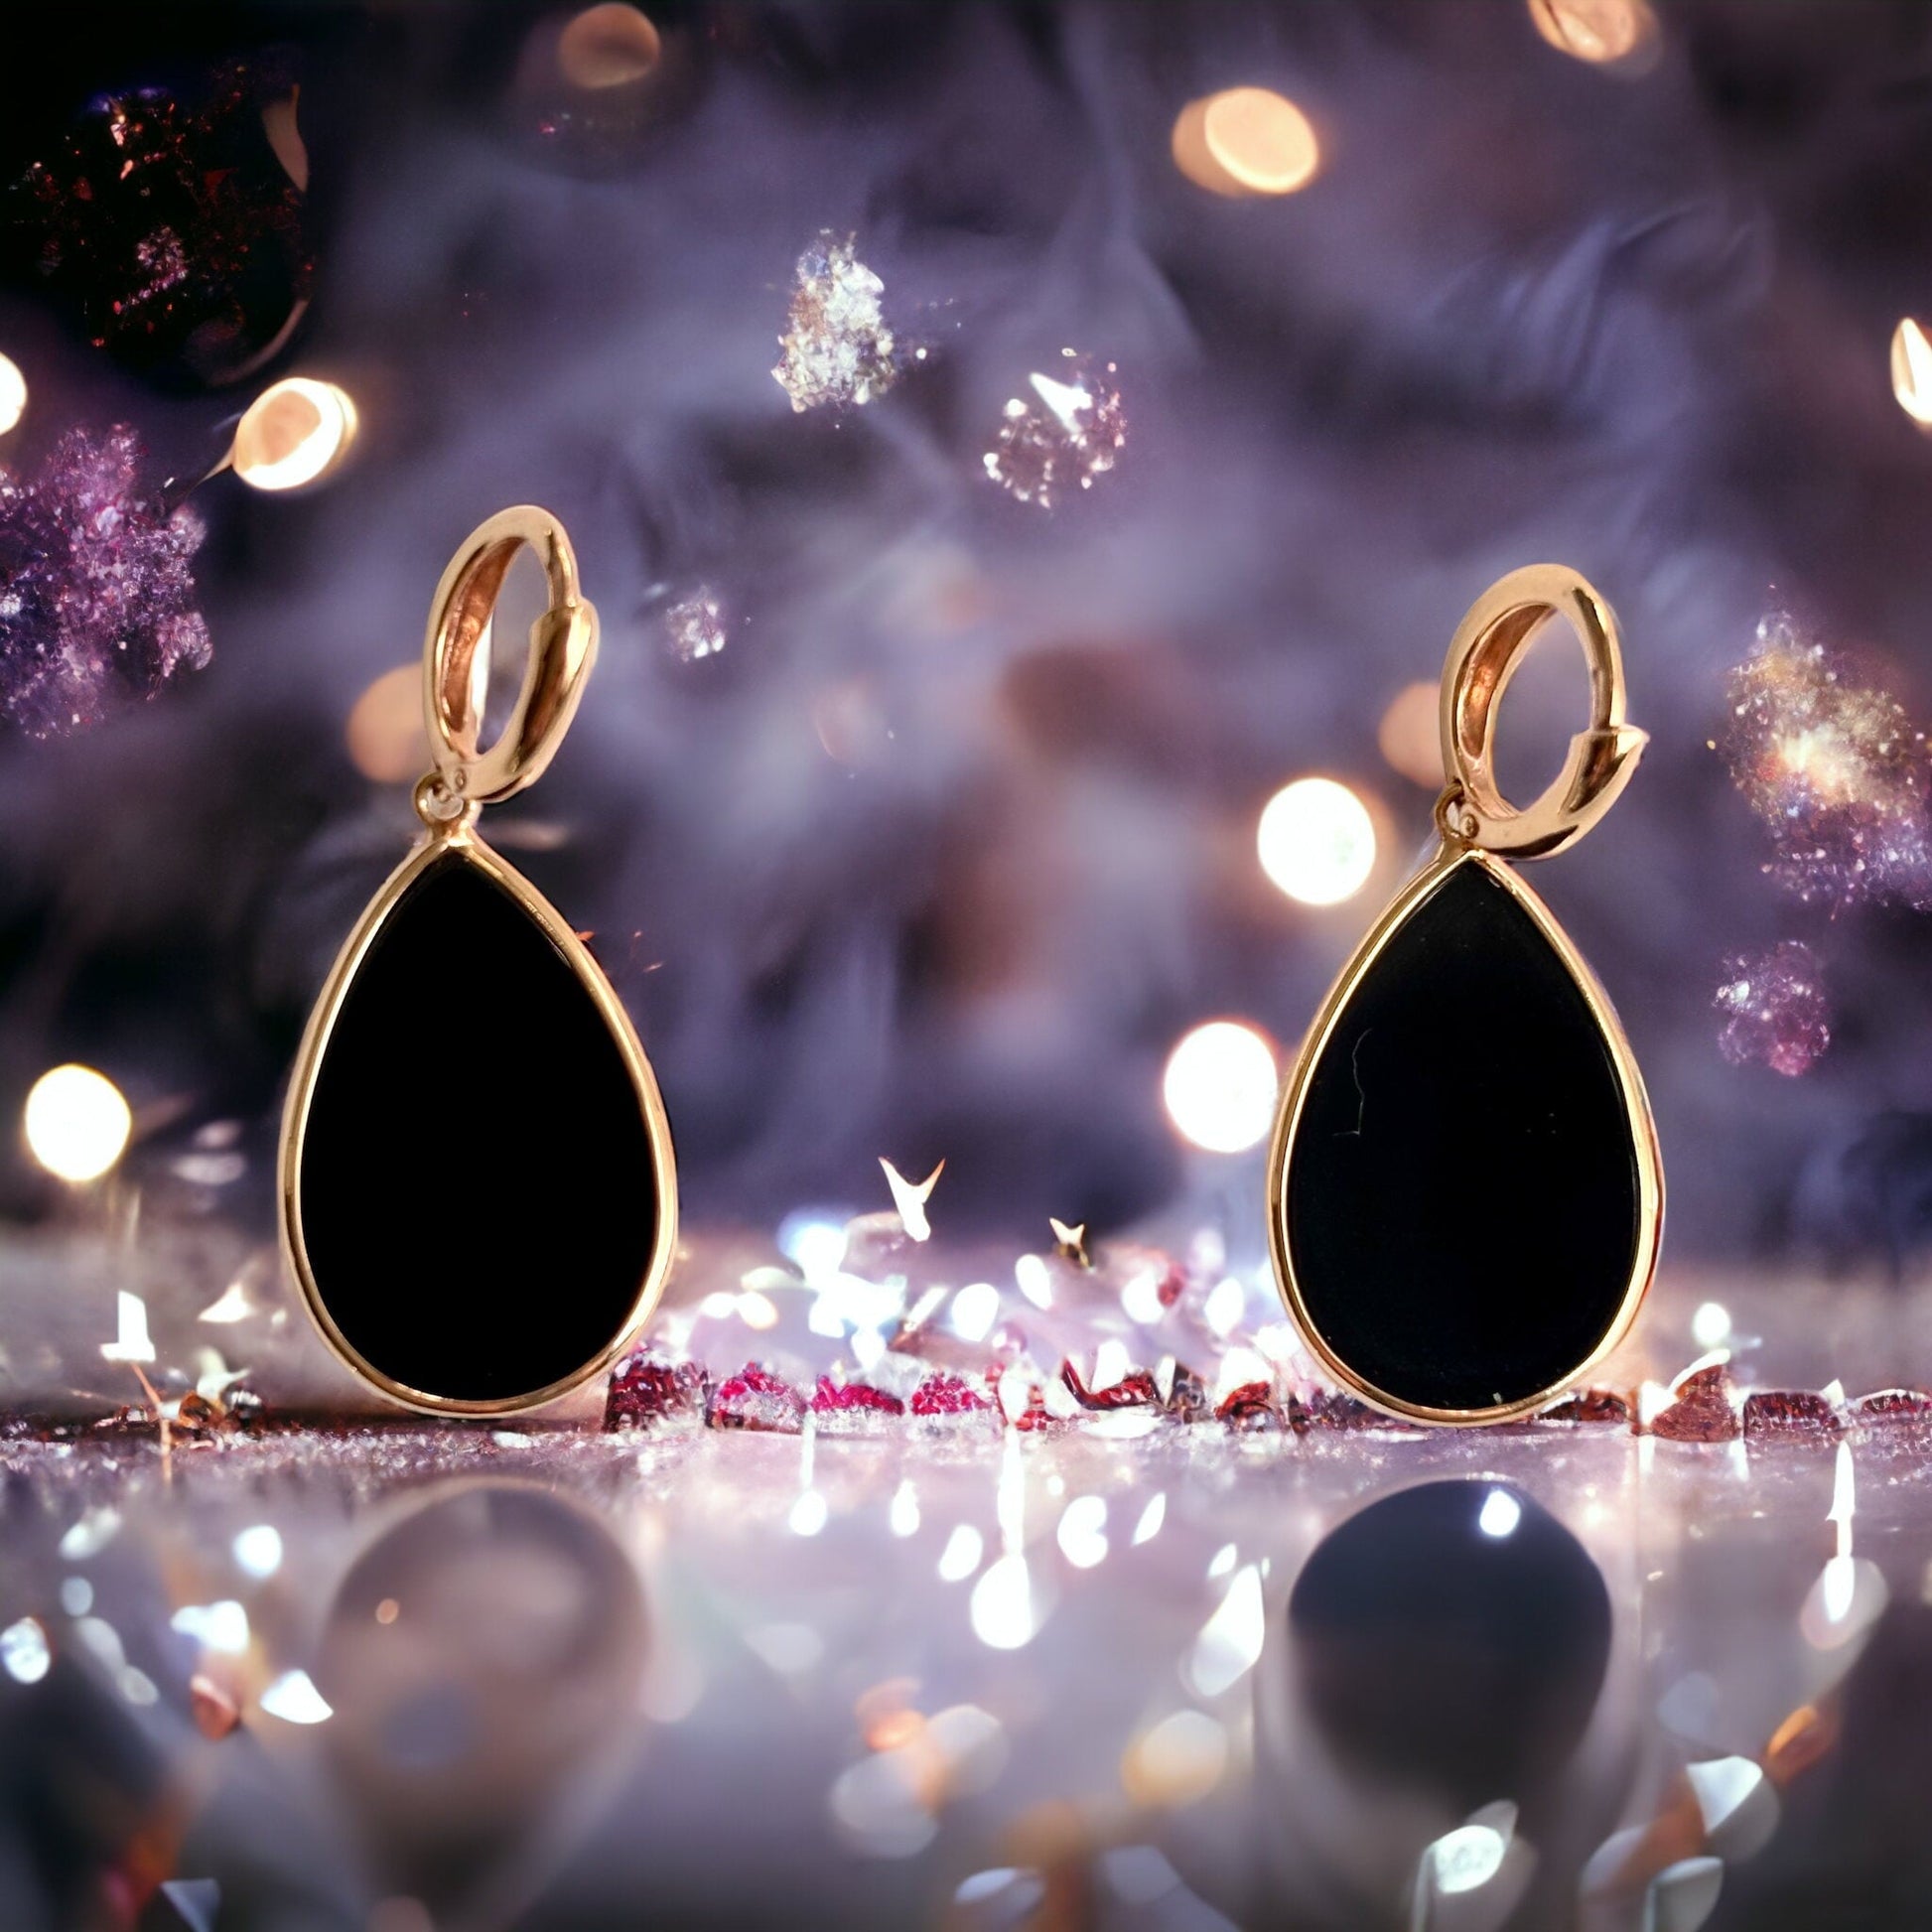 18k Solid Rose Gold Black Onyx Earrings - R. Mouzannar Jewelry